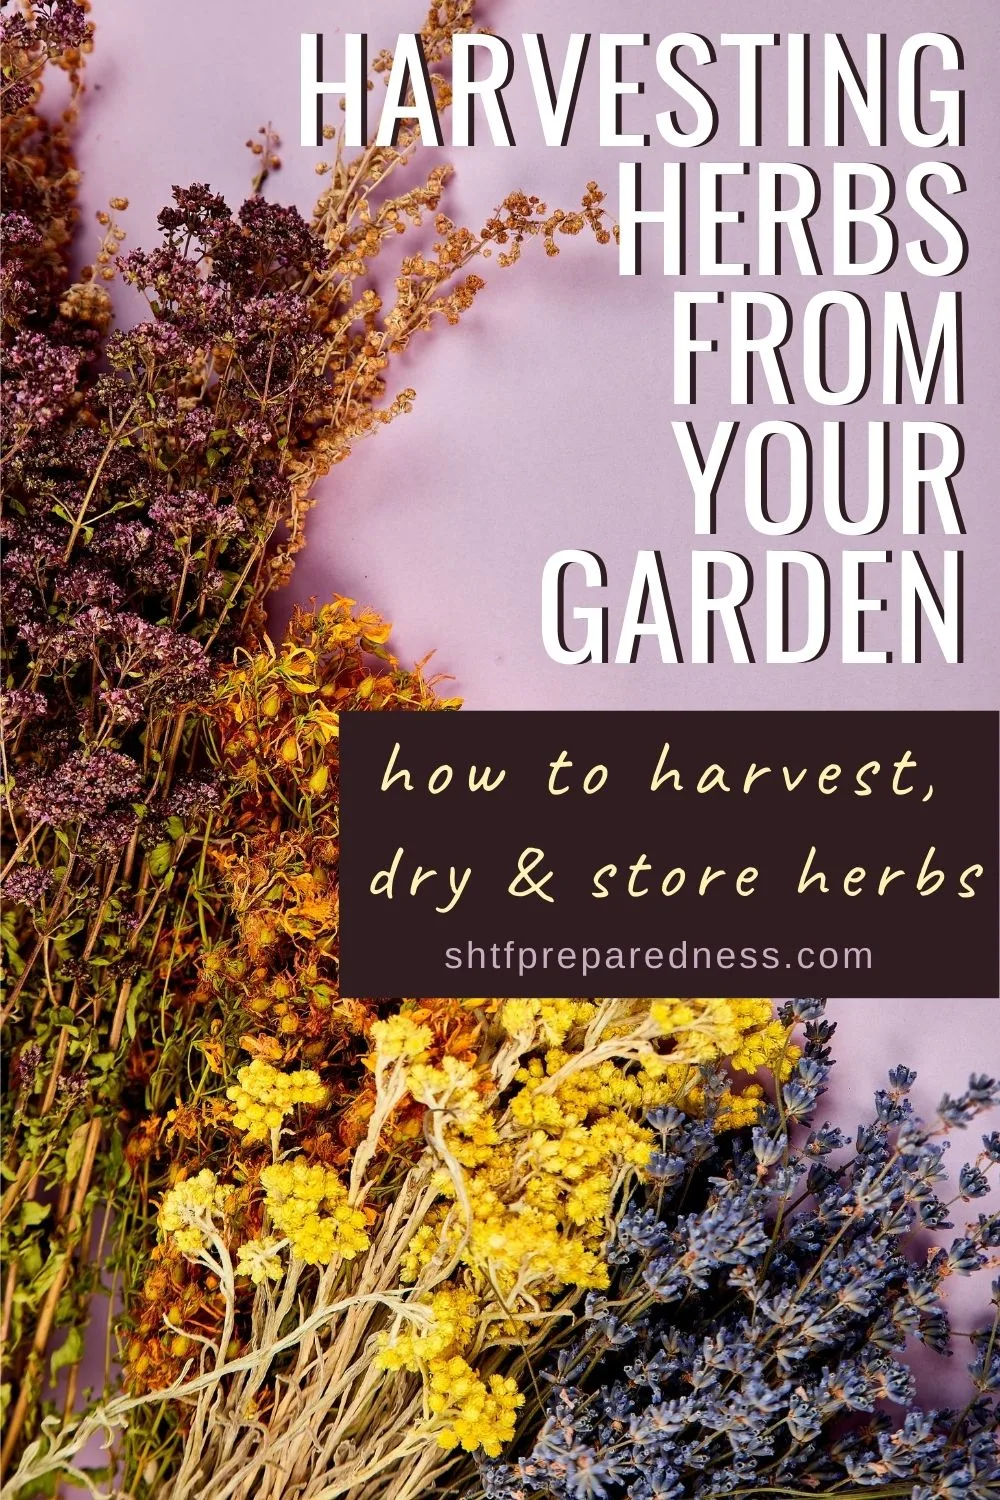 Harvesting herbs from your garden - Pinterest image